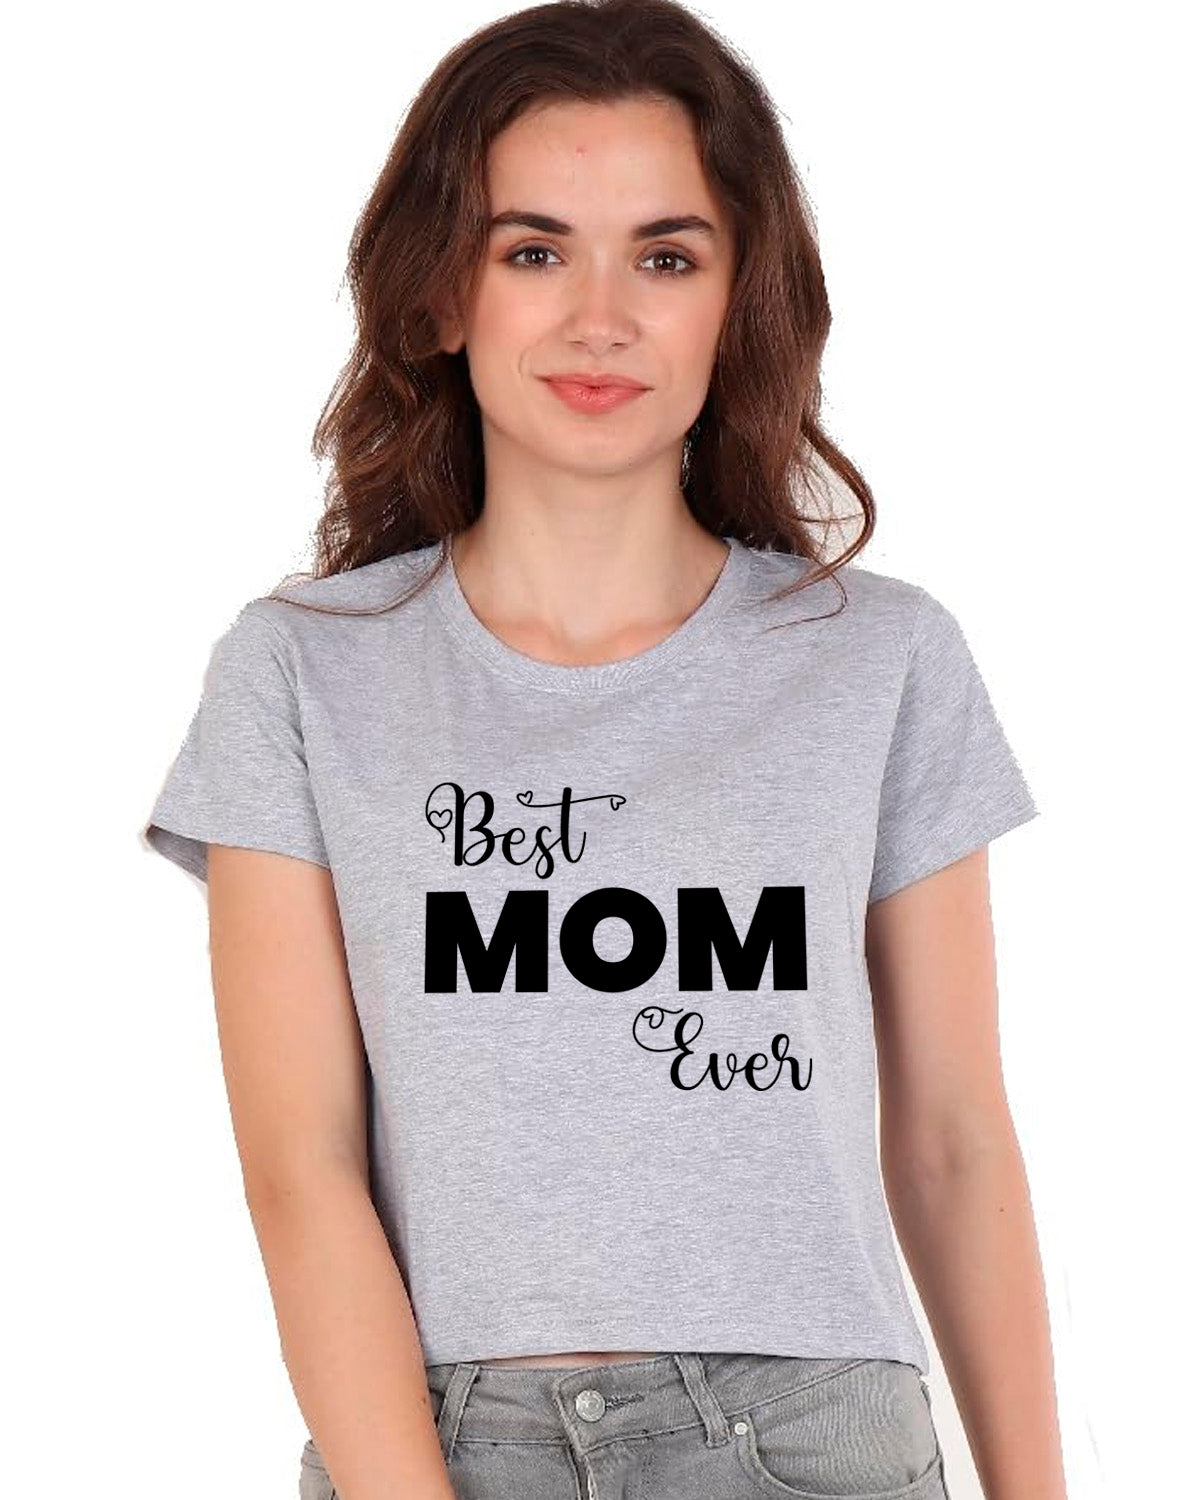 Adorable MOM Printed Womens Crop Top